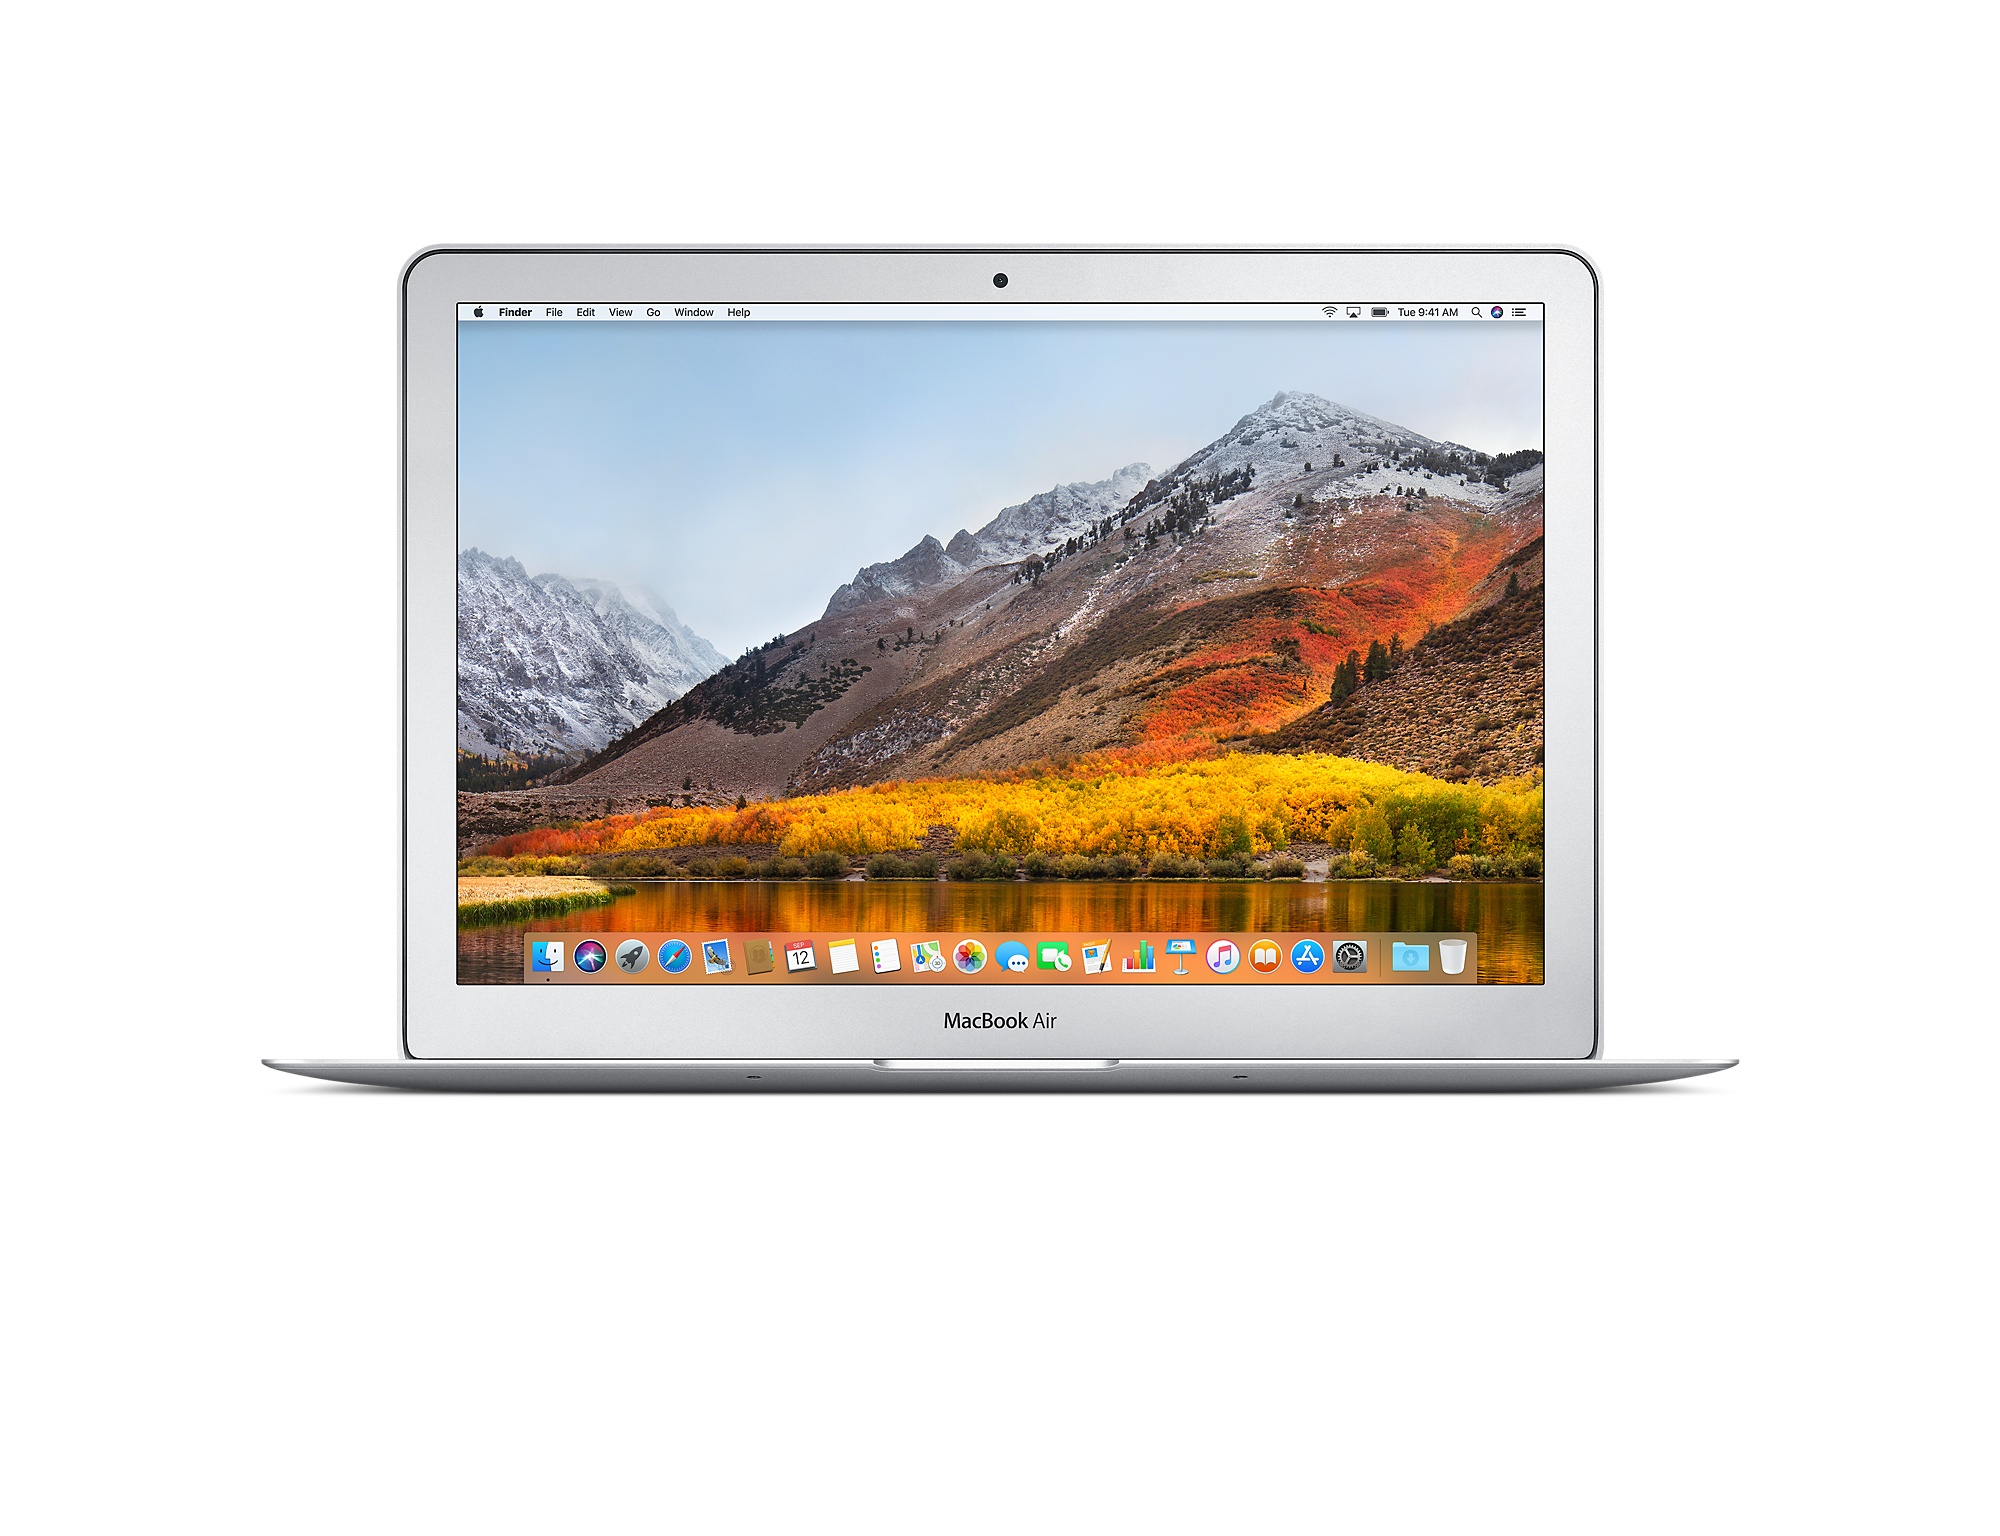 MacBook Air 2018 - Rumors, Specs, Features, Pricing & More